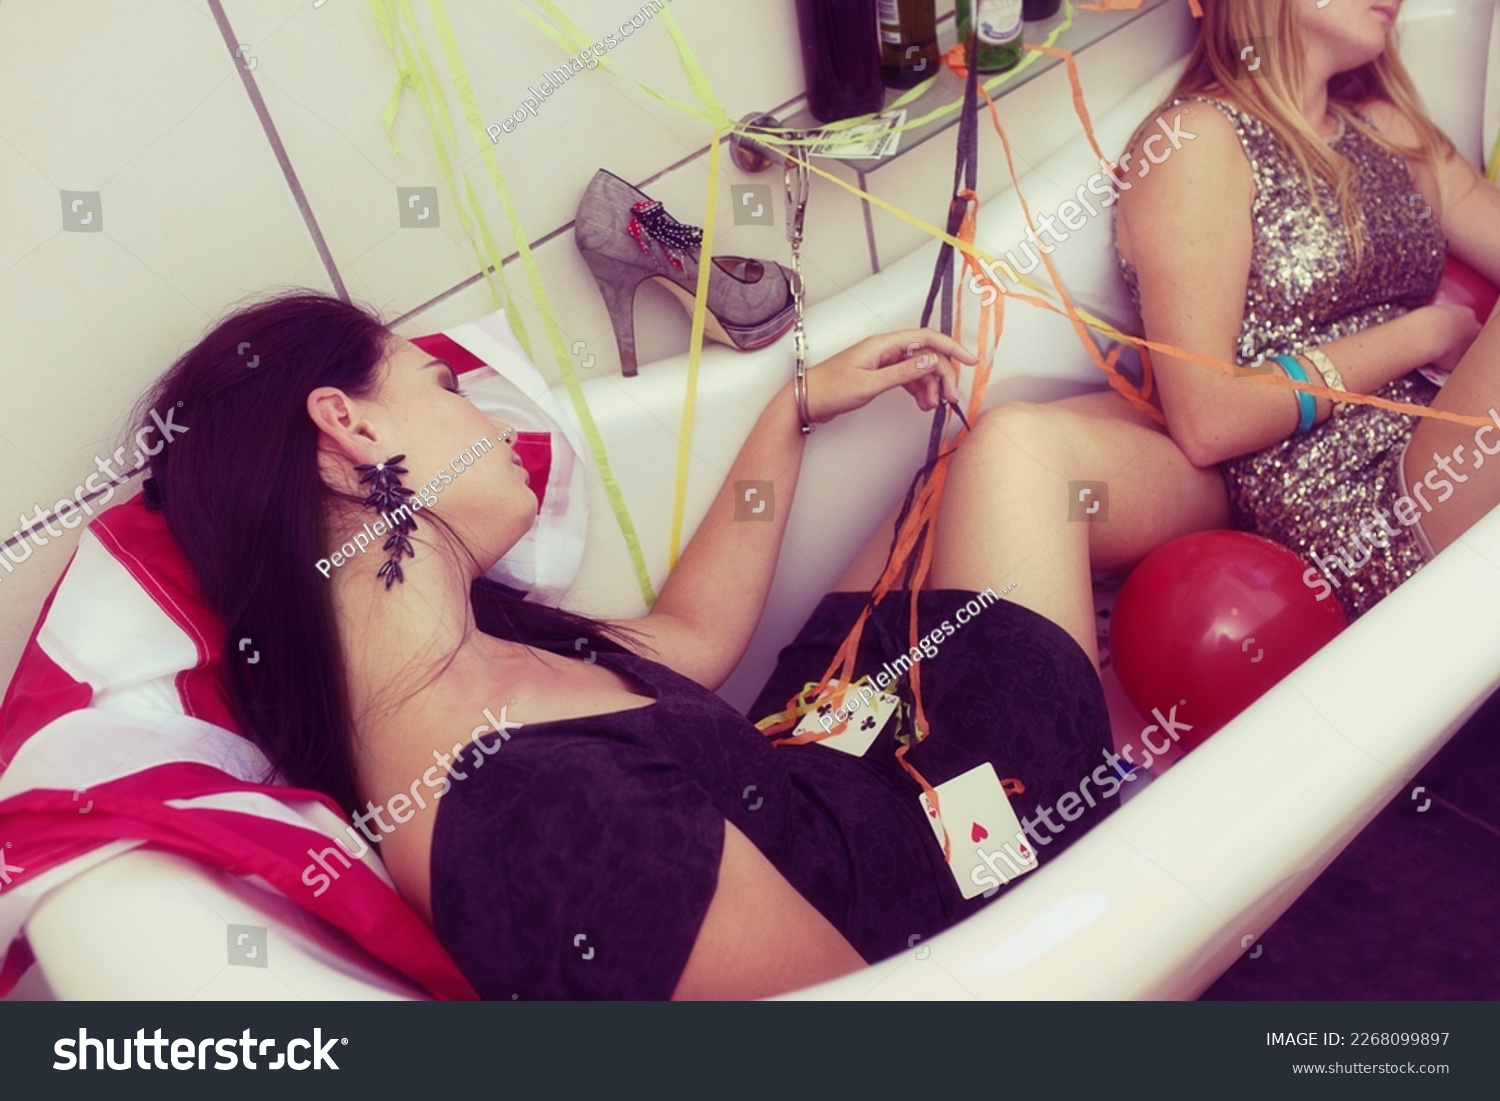 charlie blaine add real drunken girls com photo